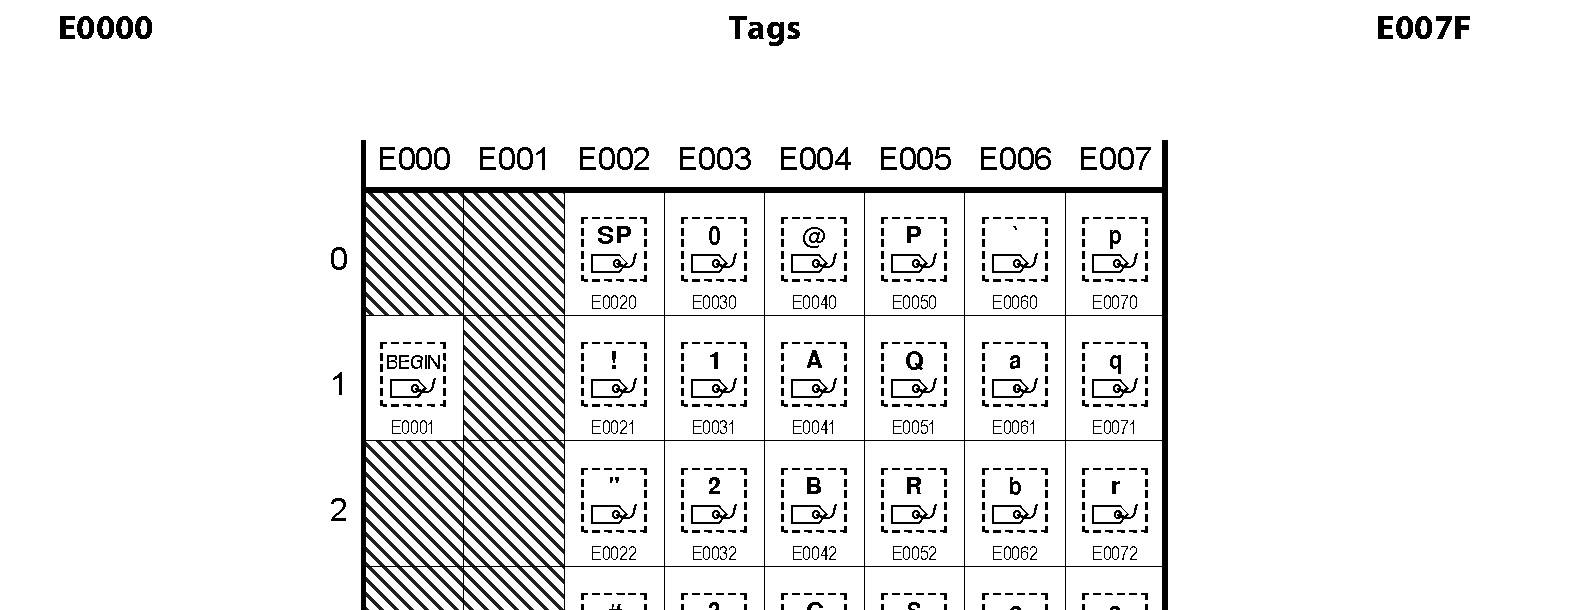 Unicode - Tags